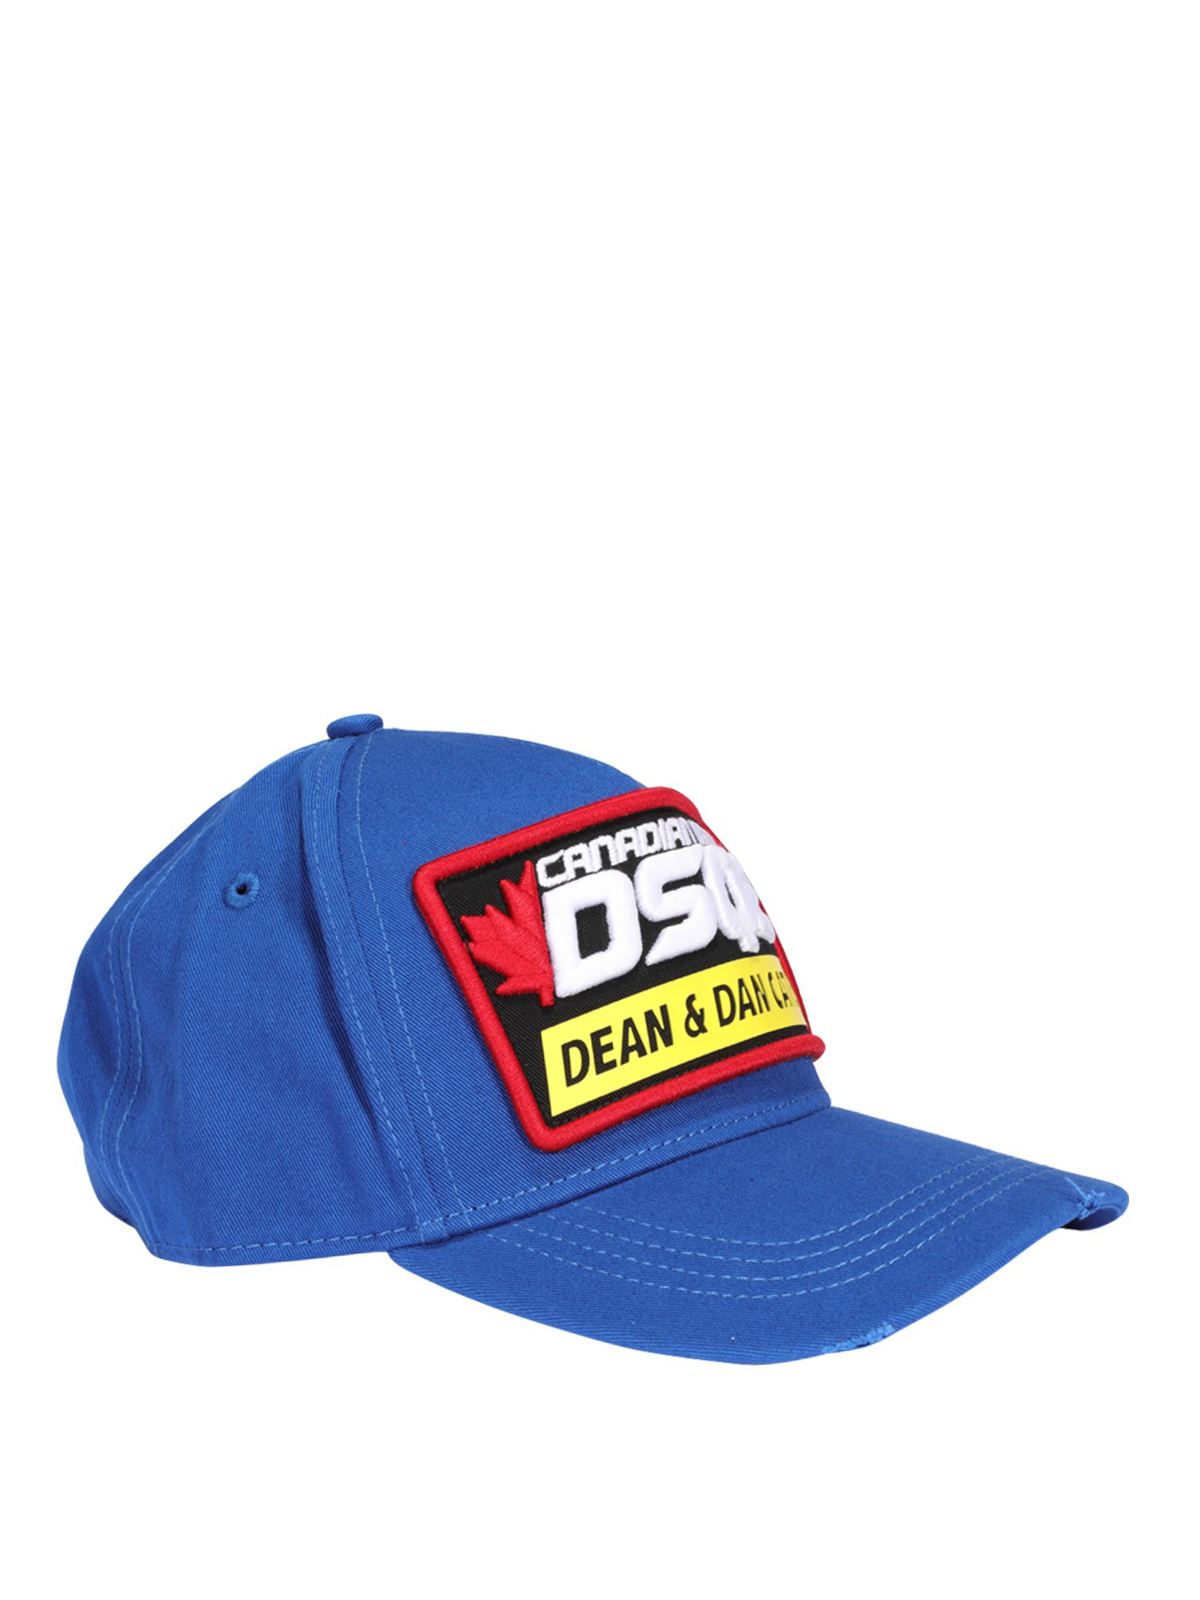 DSQUARED2 LOGO PATCH BLUE BASEBALL CAP